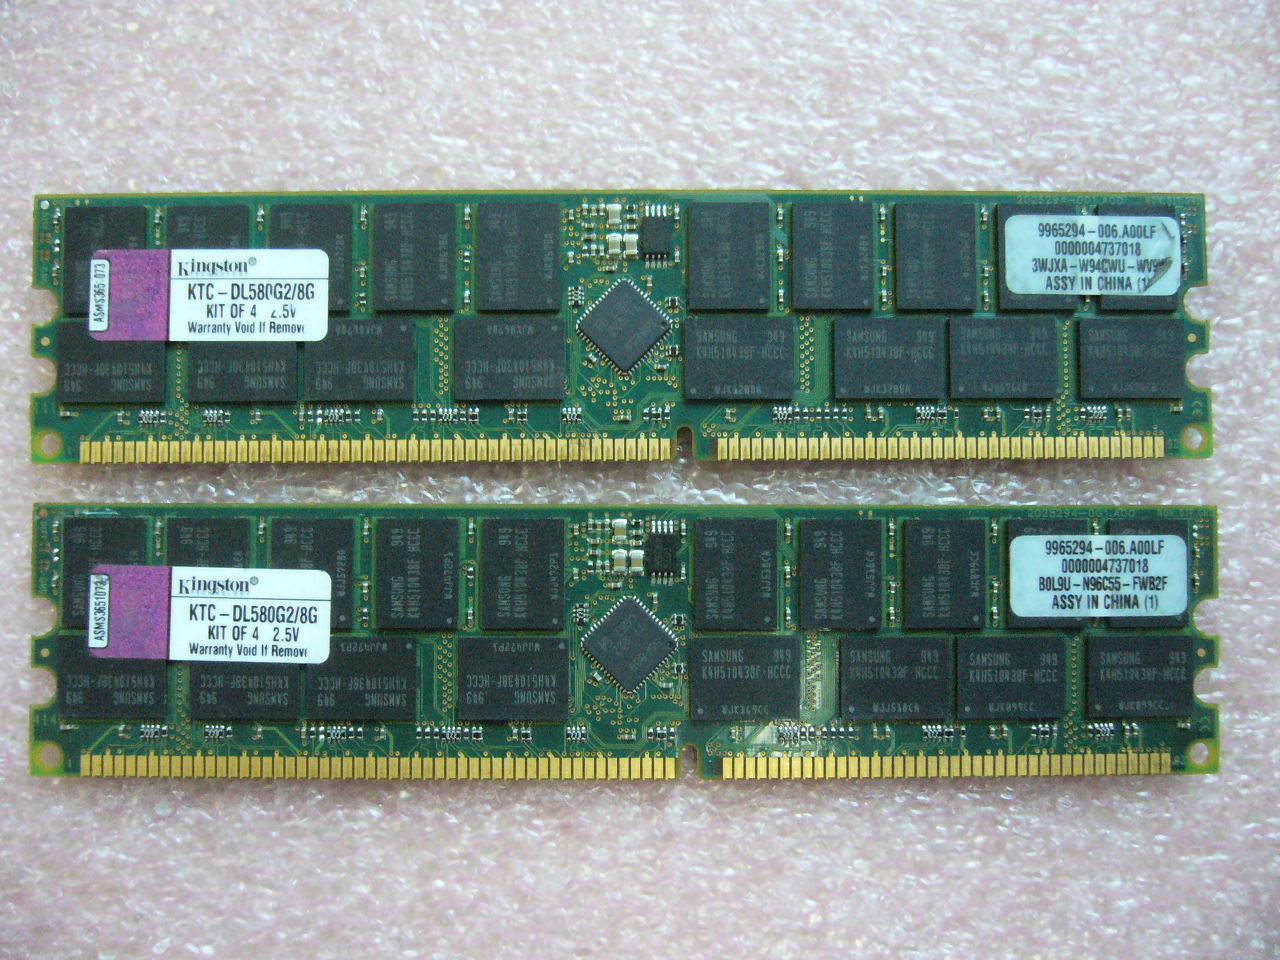 QTY 1x 2GB Module Kingston KTC-DL580G2/8G PC-1600R ECC Registered Server memory - Click Image to Close